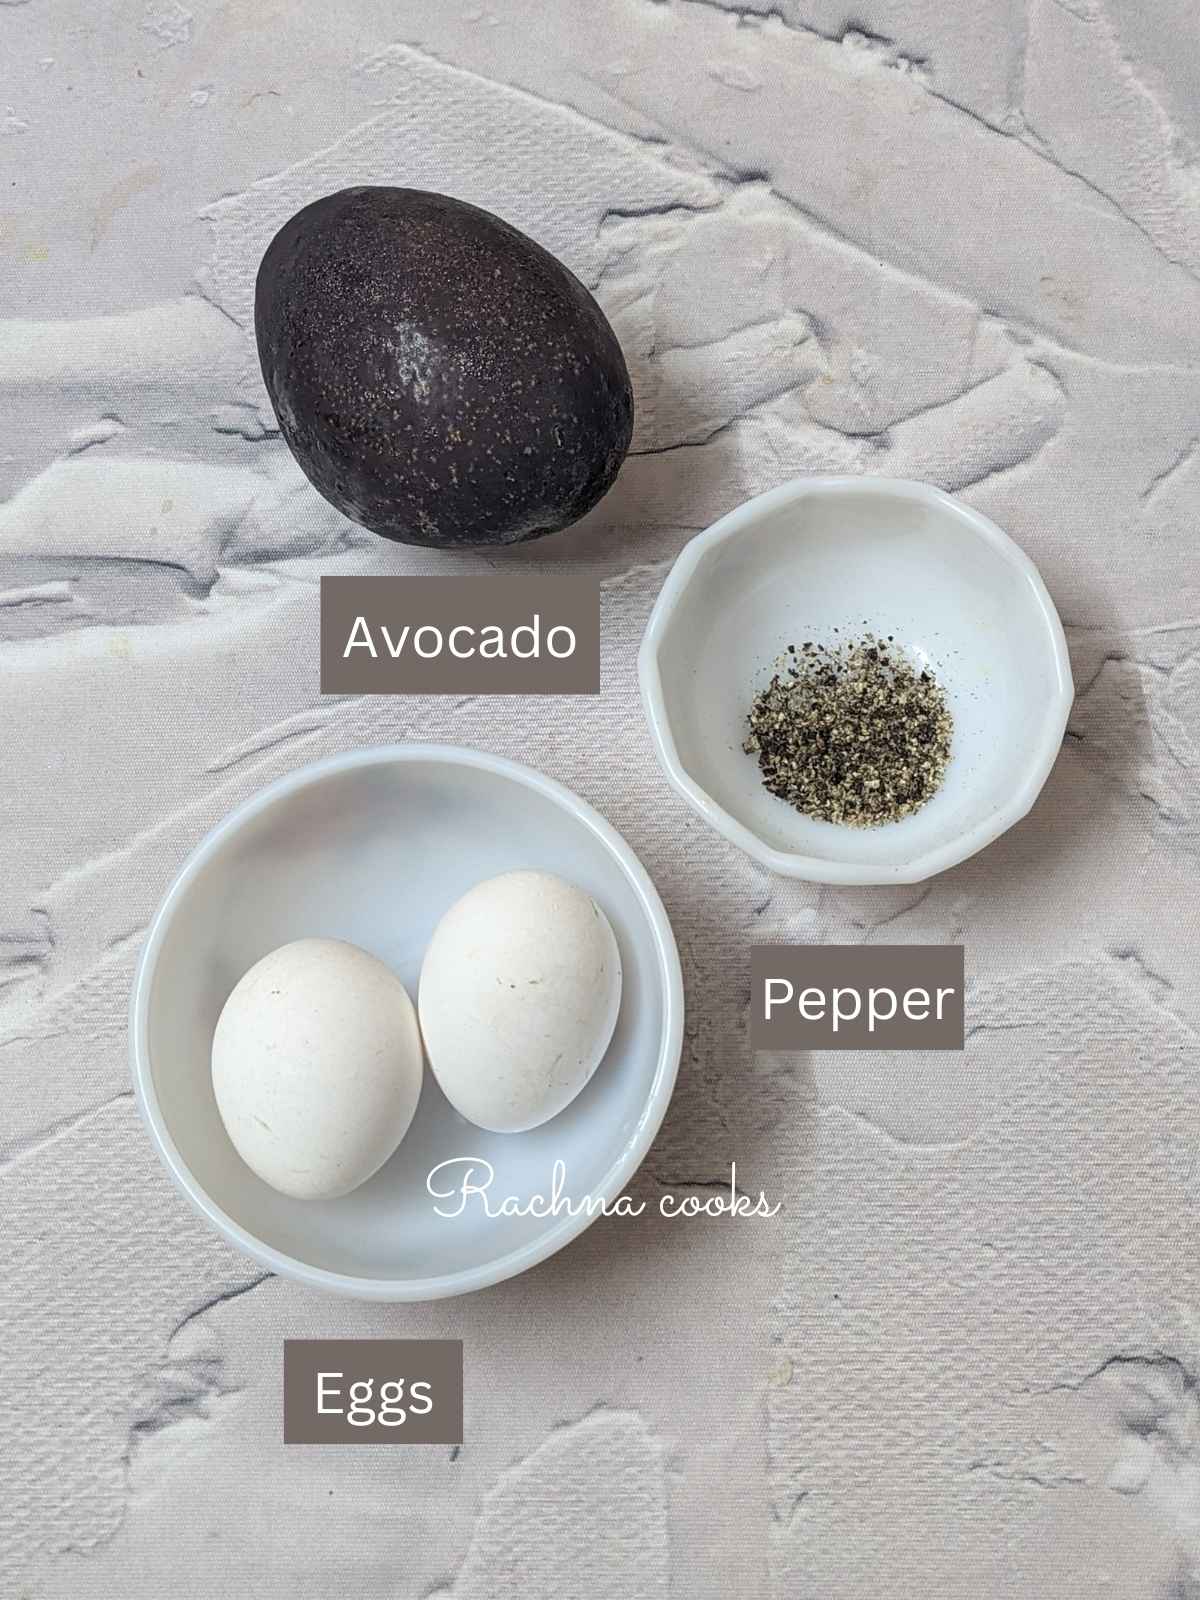 Ingredients for making avocado egg: 2 eggs, avocado and seasoning